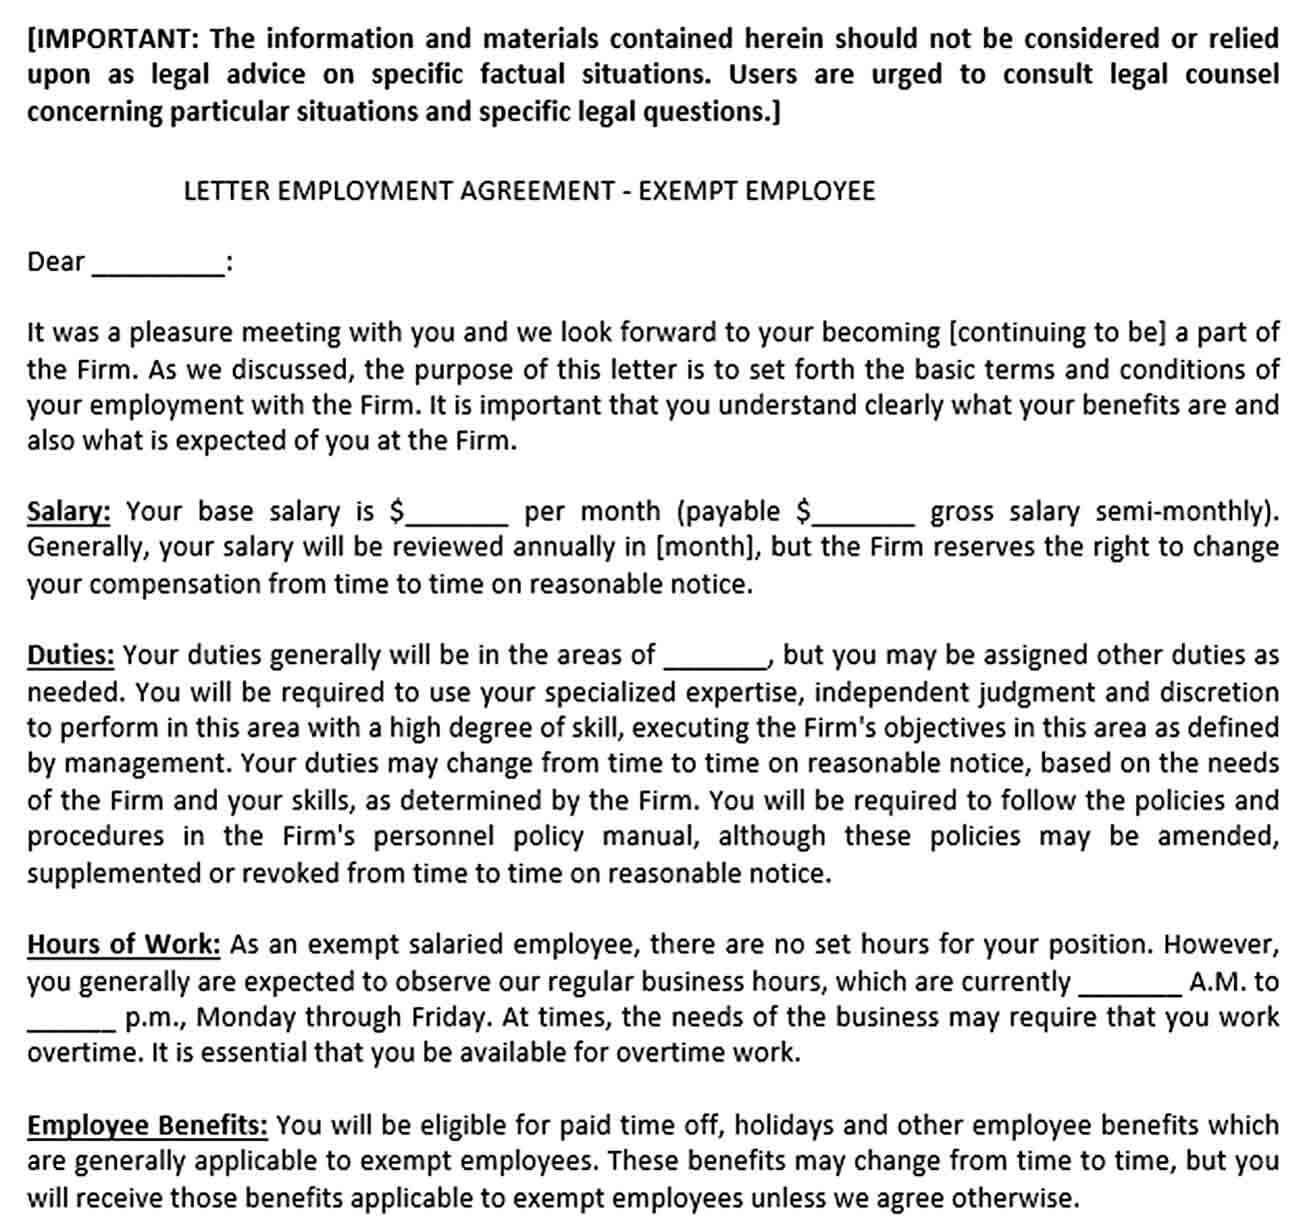 Sample Exempt Employee Employement Agreement Letter